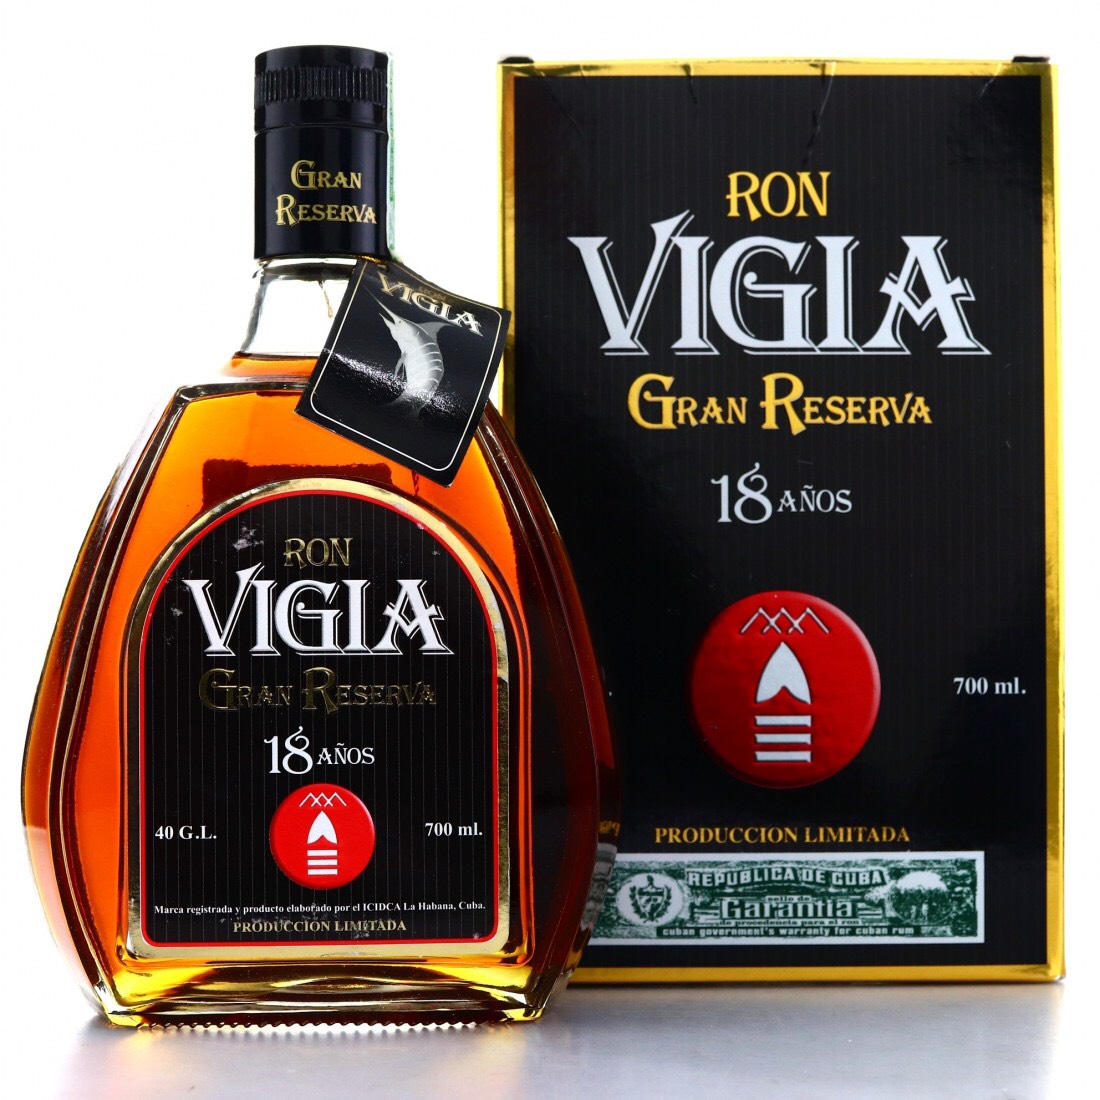 Bottle image of Ron Vigia Grand Reserva